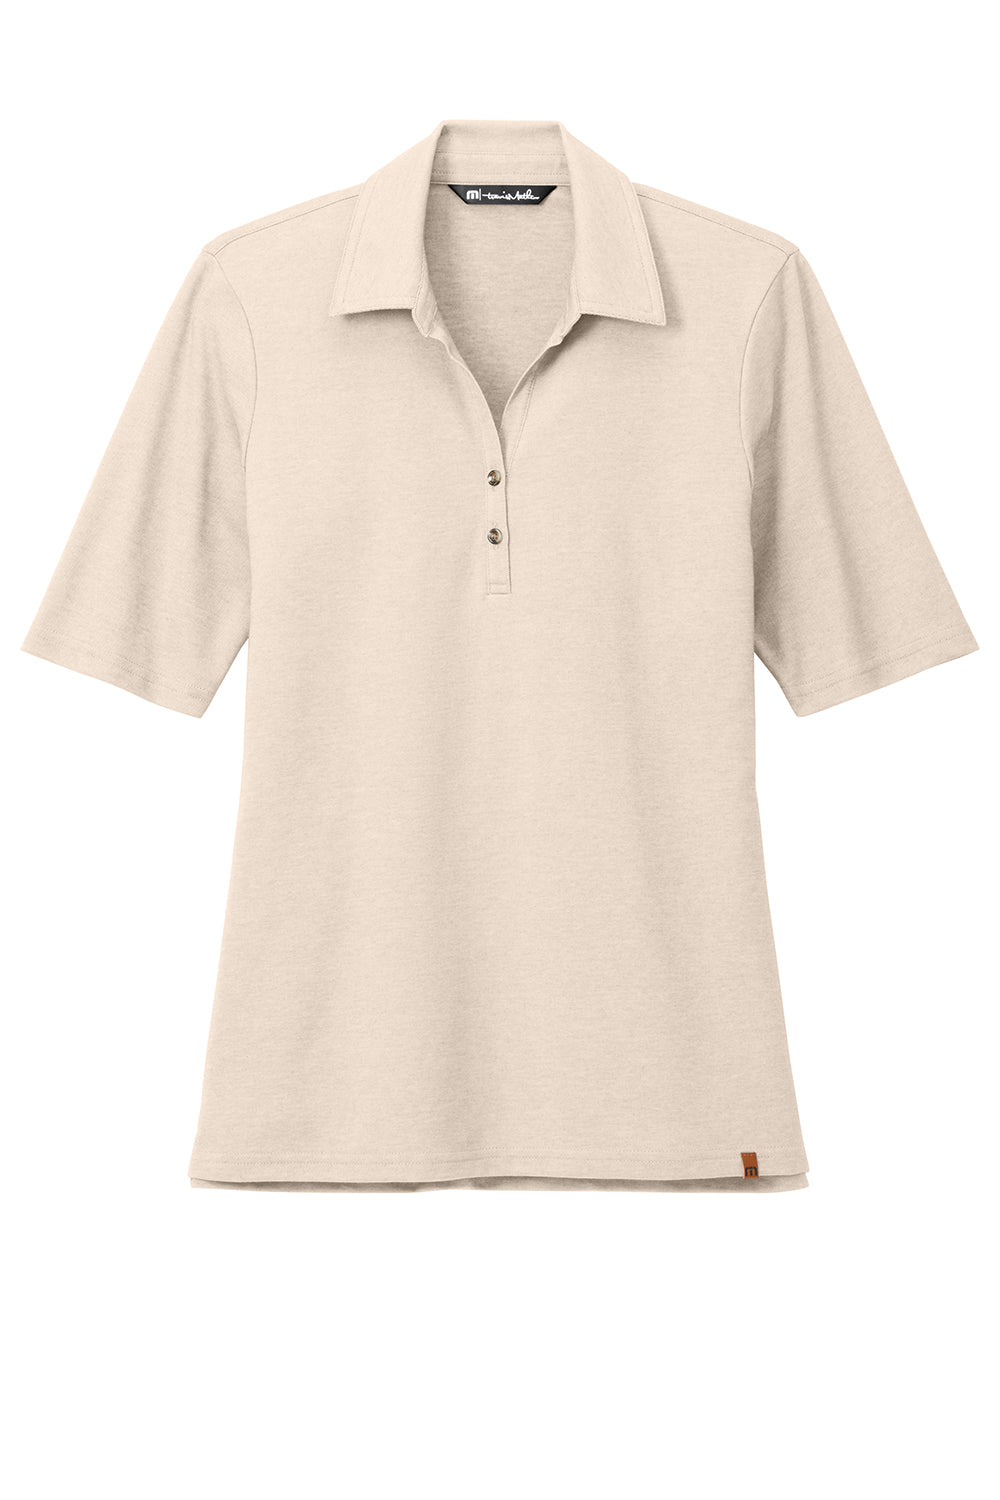 TravisMathew TM1LD004 Womens Sunsetters Wrinkle Resistant Short Sleeve Polo Shirt Heather Natural Flat Front